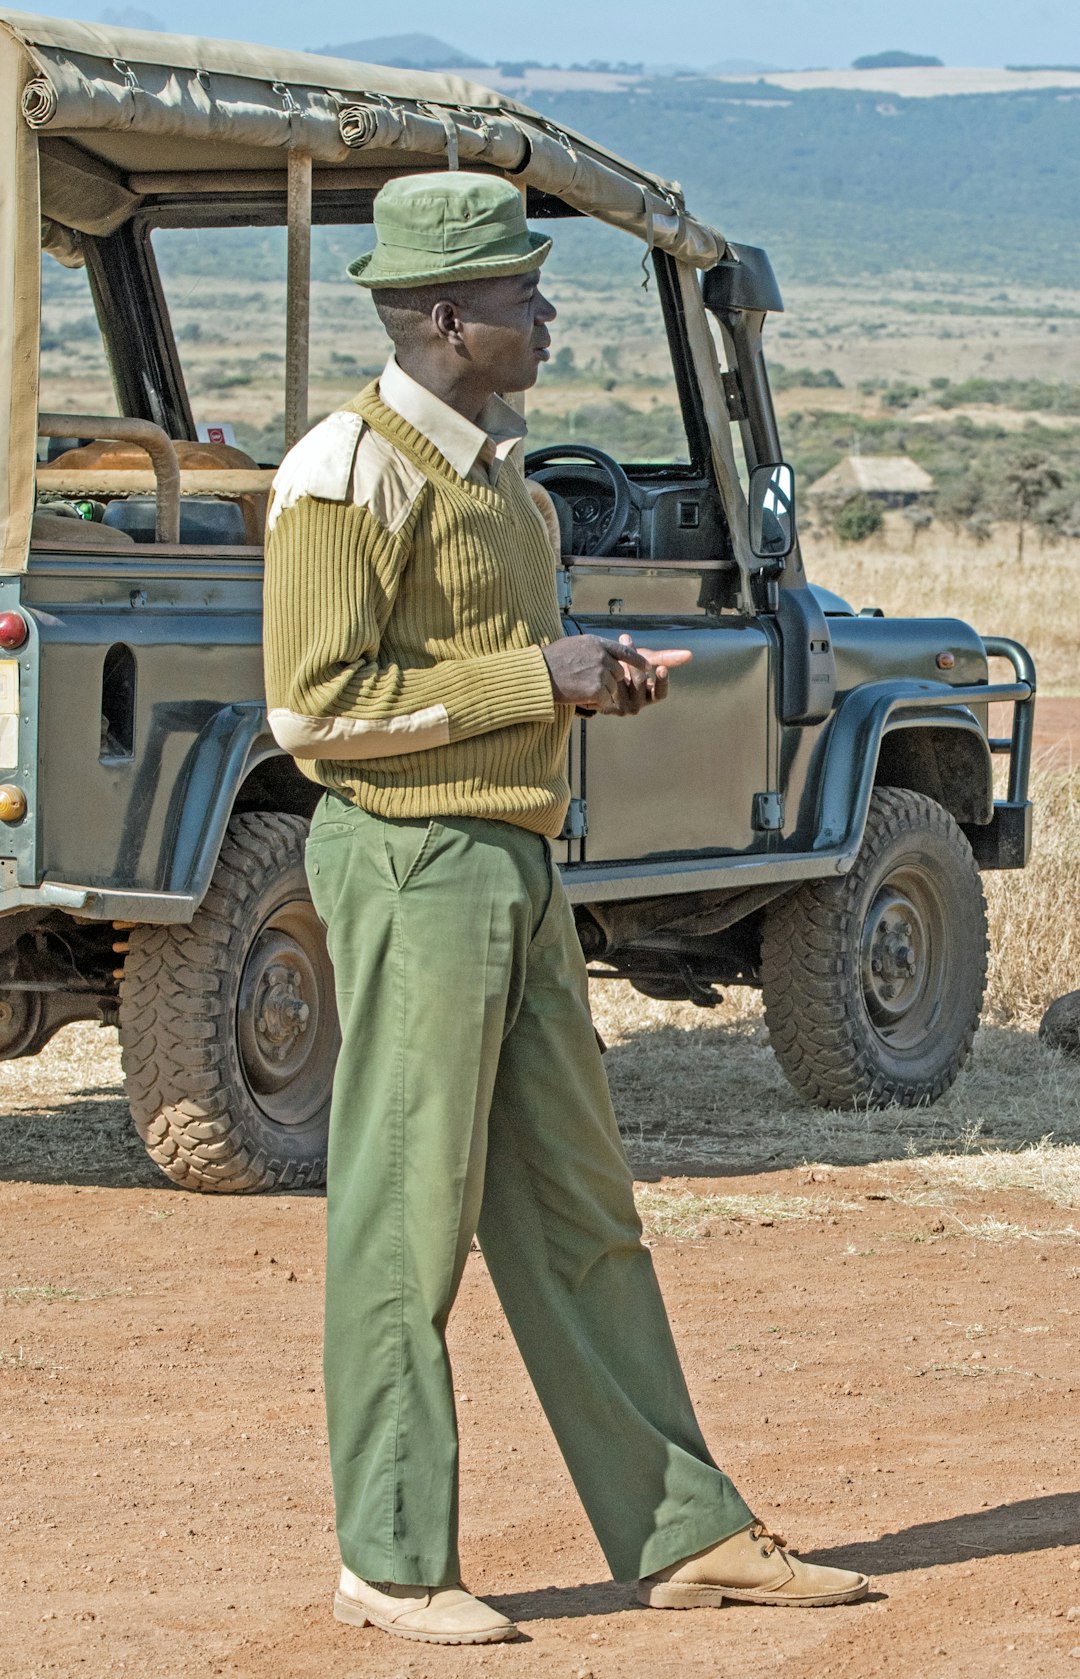 travelers stories about Off-roading in Lewa Wildlife Conservancy, Kenya